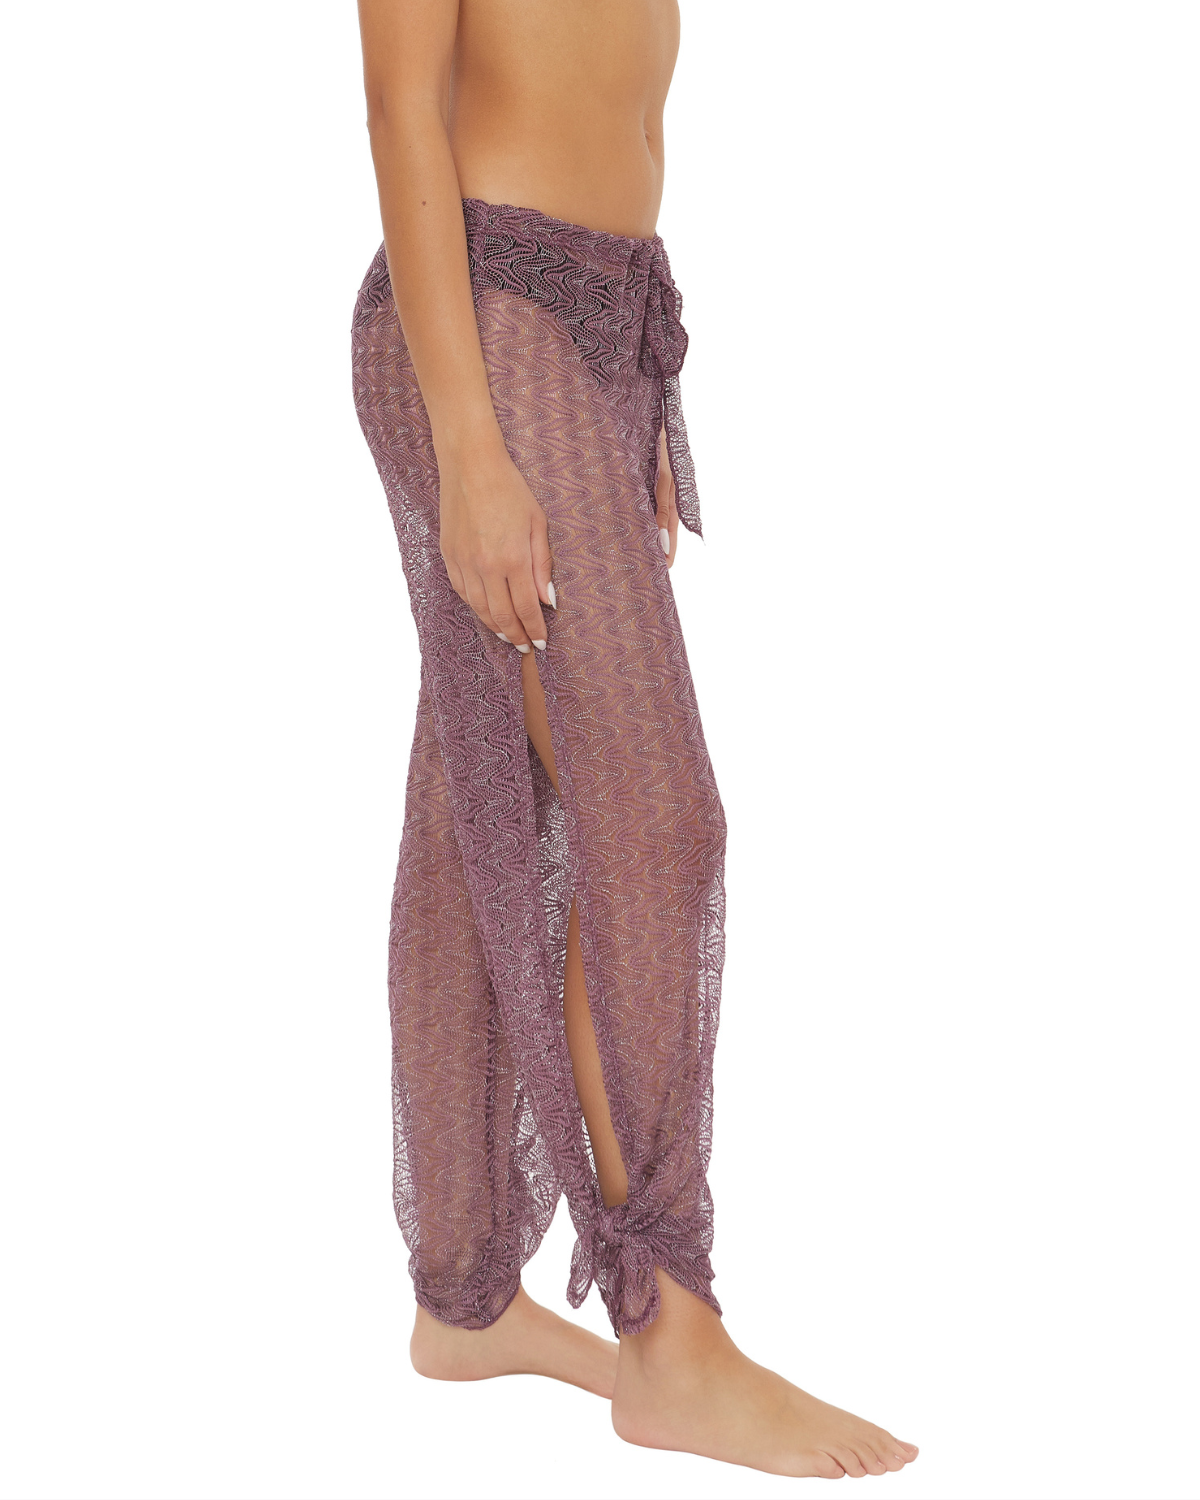 Model wearing a split leg crochet cover up pant in fig